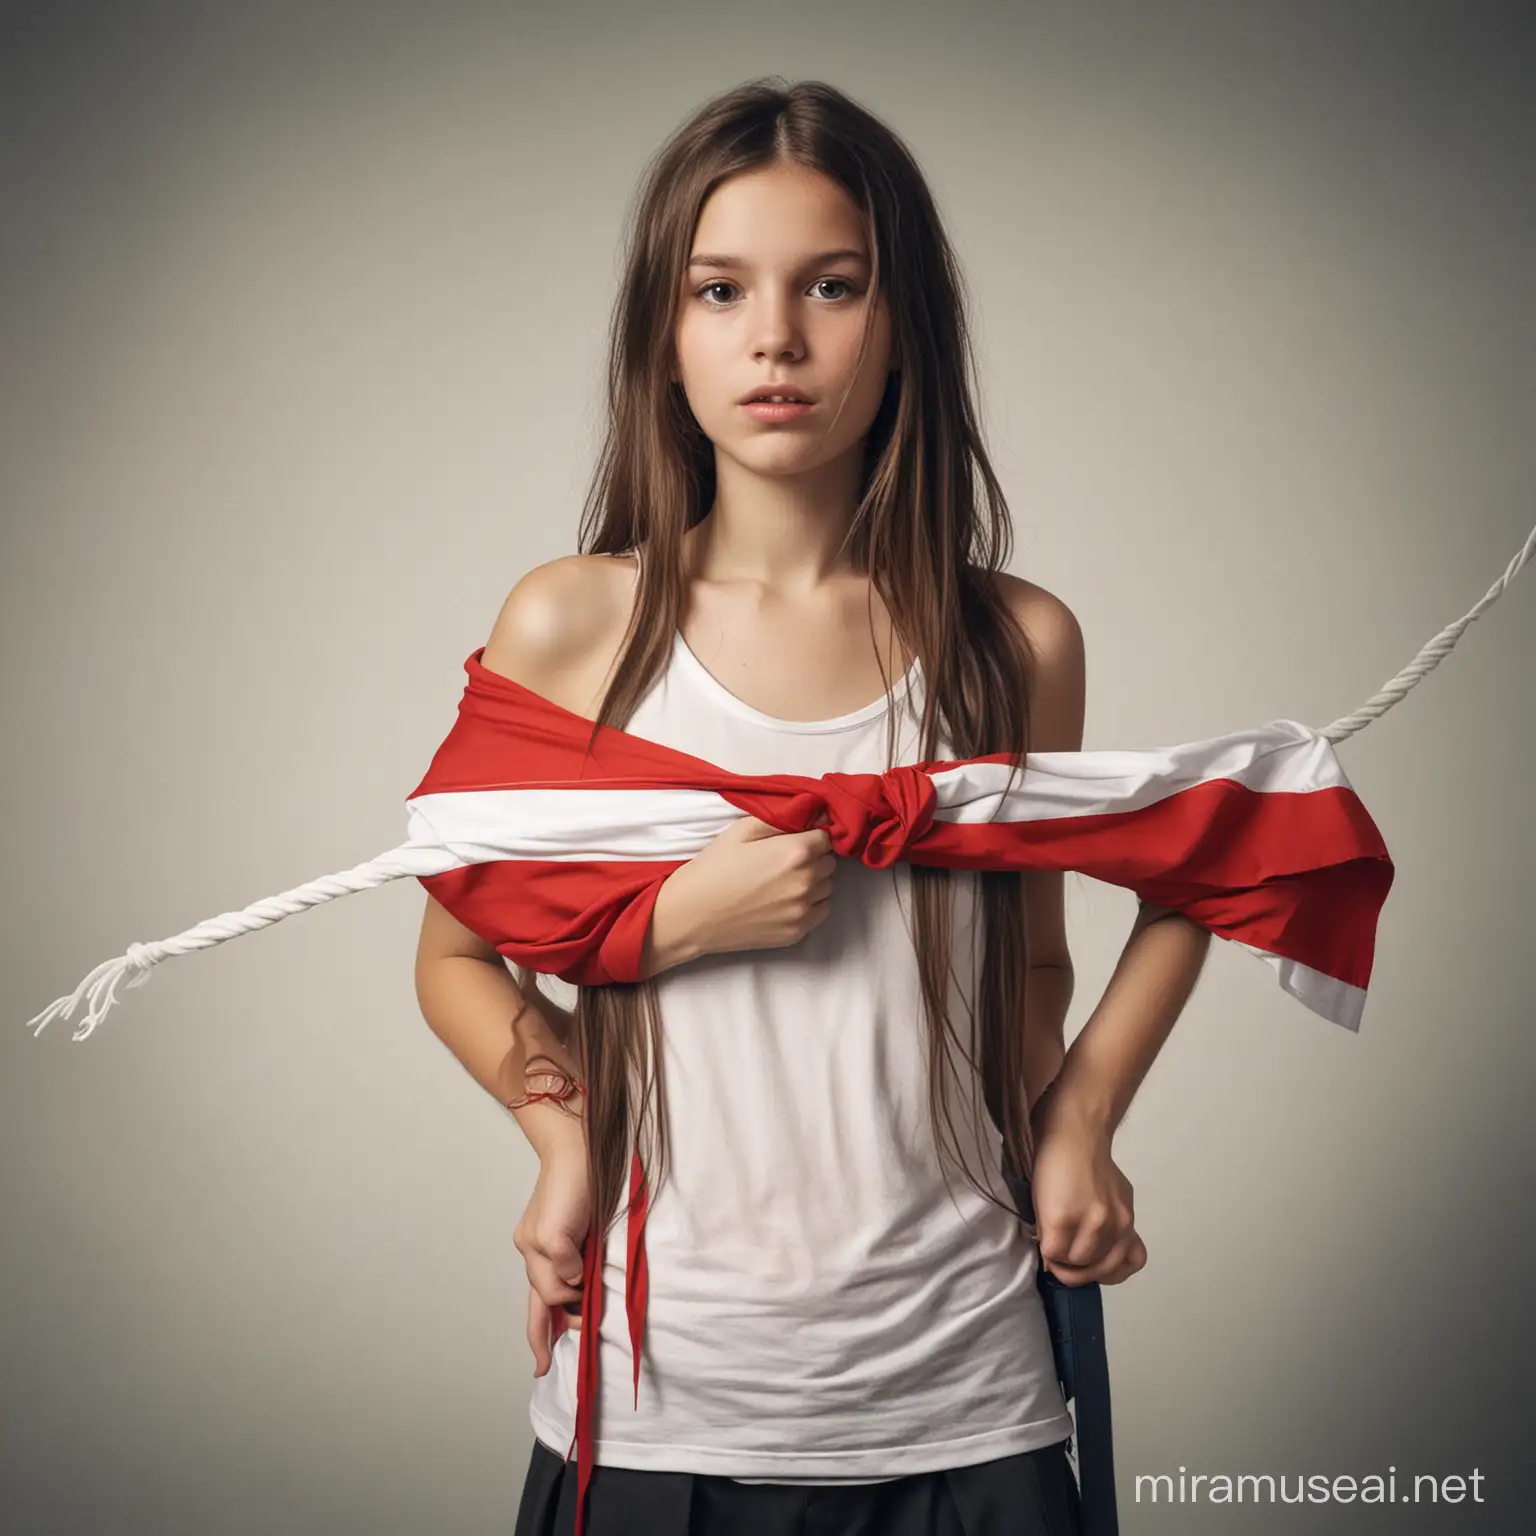 Danish Girl Tied to National Flag in Symbolic Bond